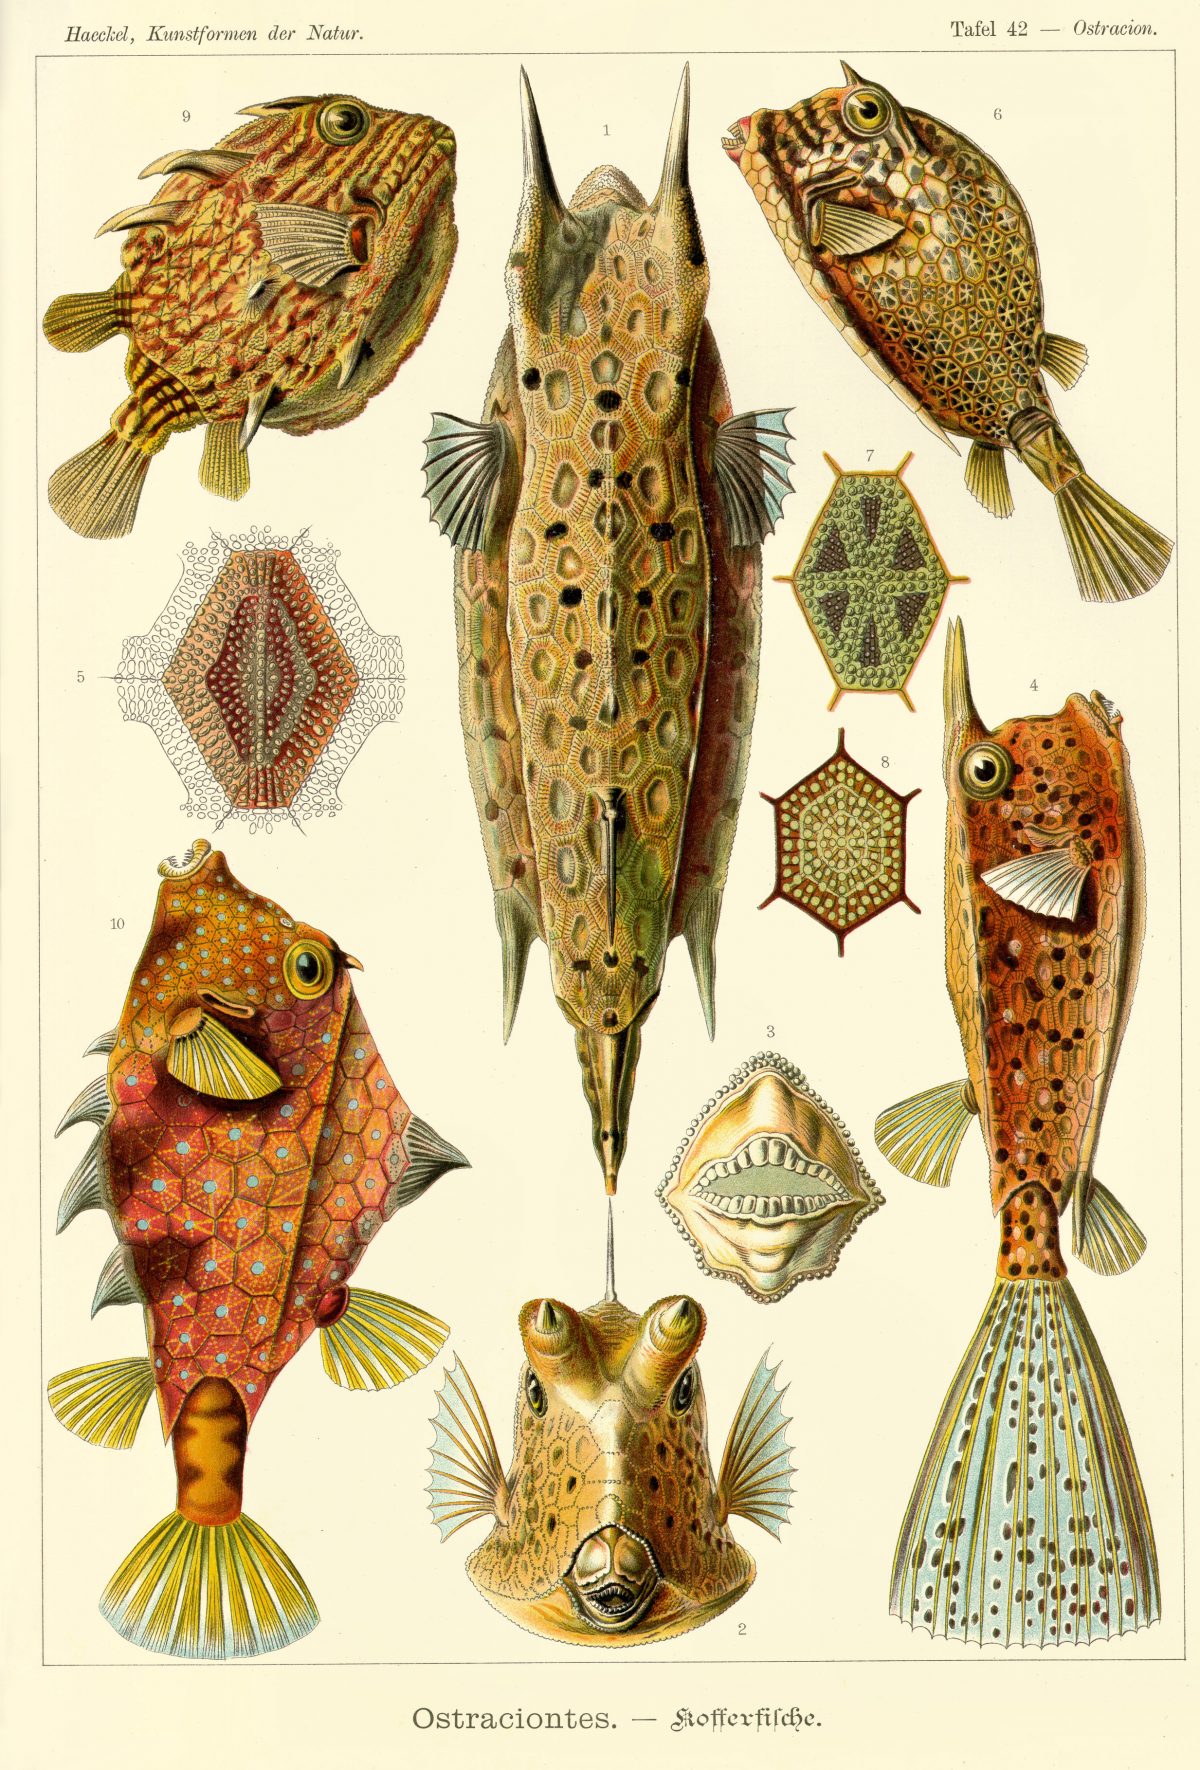 Ernst Haeckel - Kunstformen der Natur (1904), plate 42: Ostraciontes